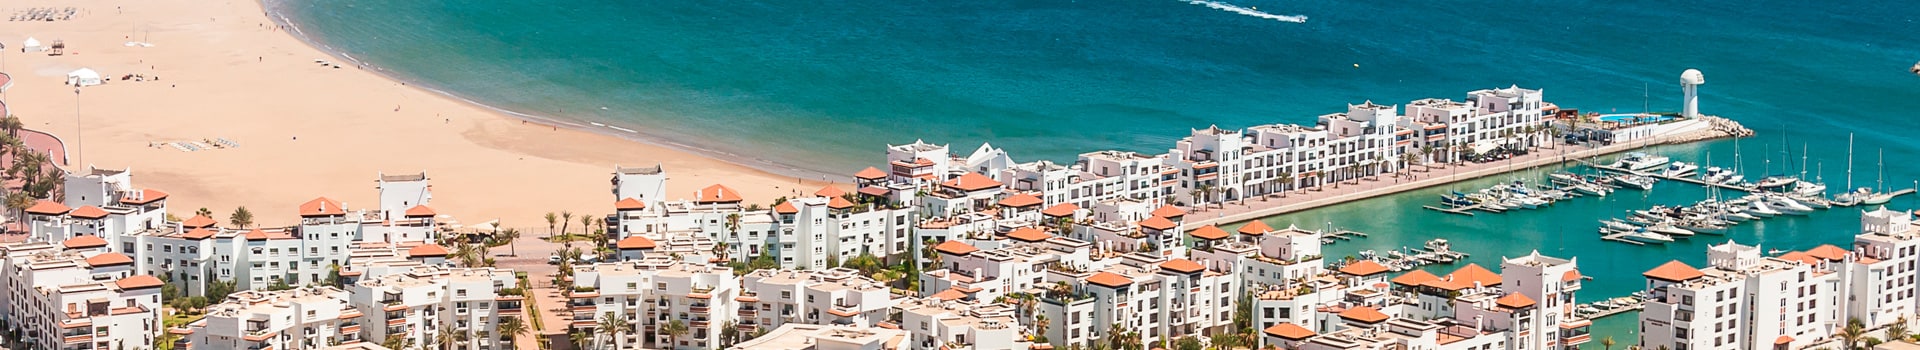 Paris - Agadir